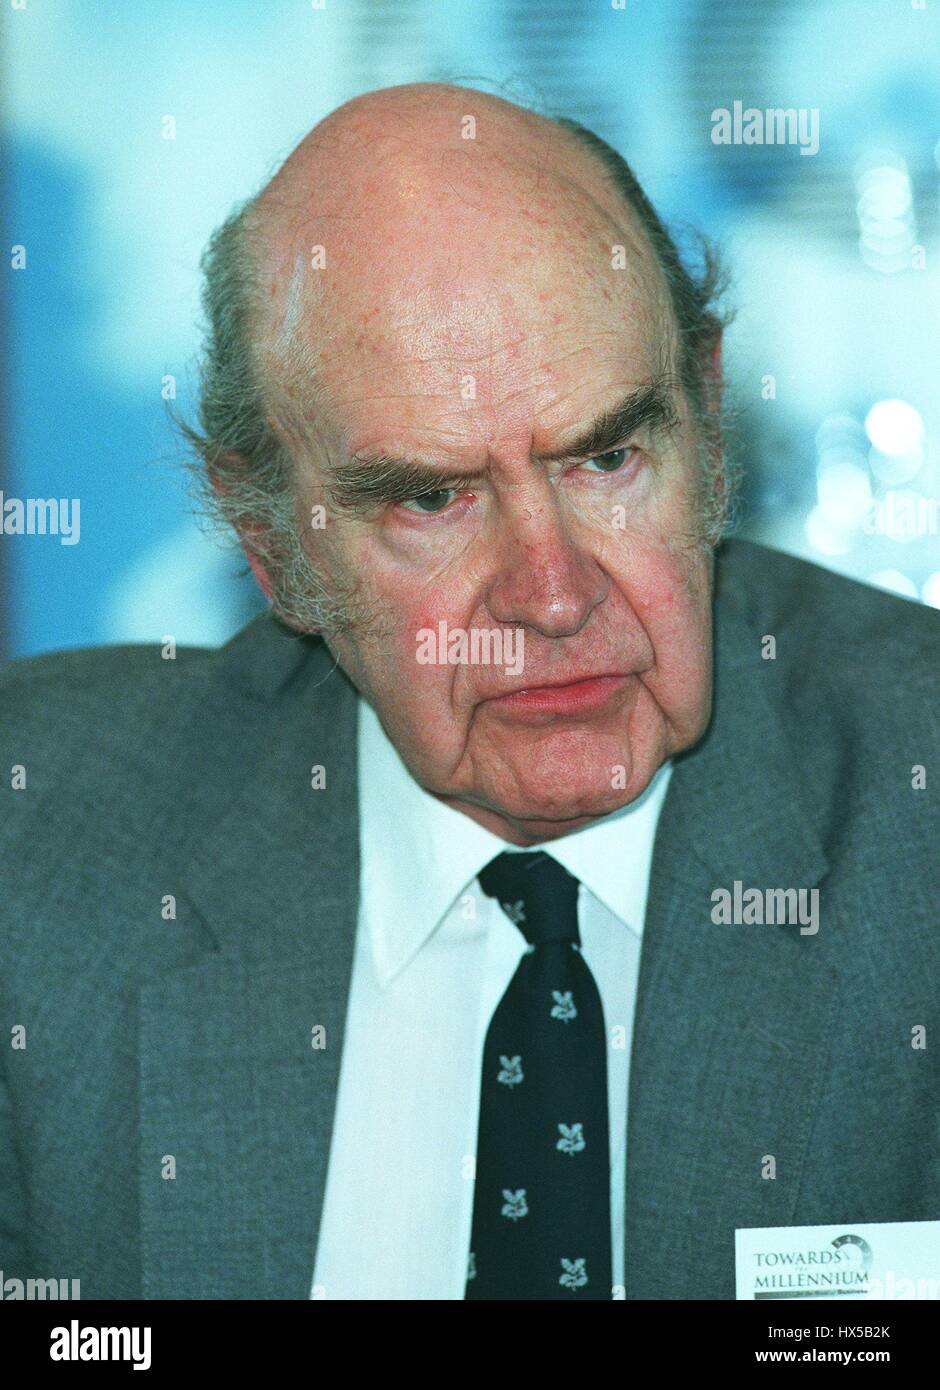 SIR ROBIN IBBS CHAIRMAN 'LLOYDS BANK PLC' 19 June 1995 Stock Photo